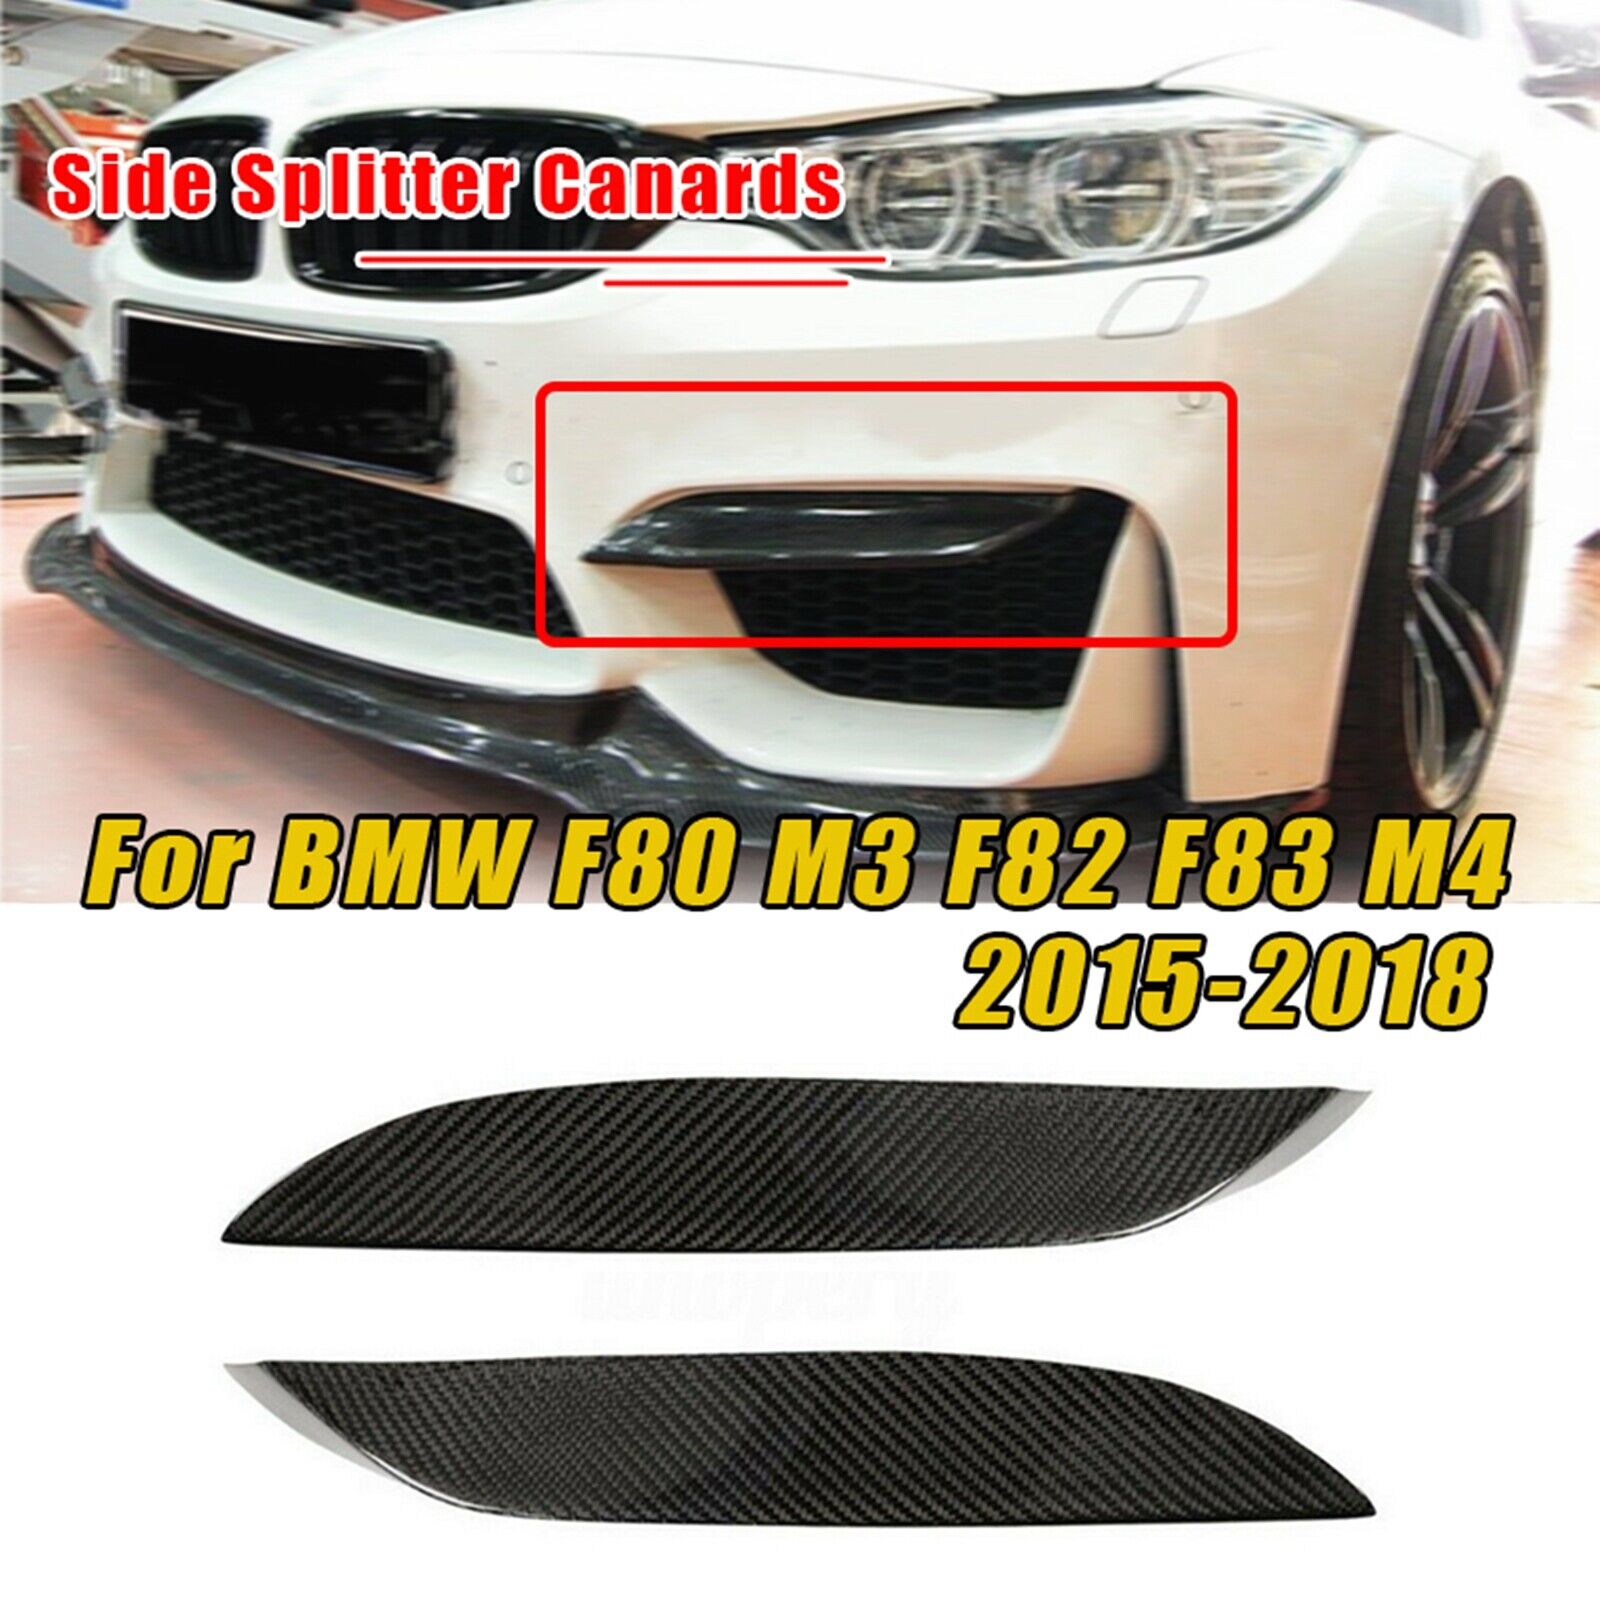 Carbon Front Bumper Side Splitter Canard Lip For BMW F80 M3 F82 F83 M4 15-20 US